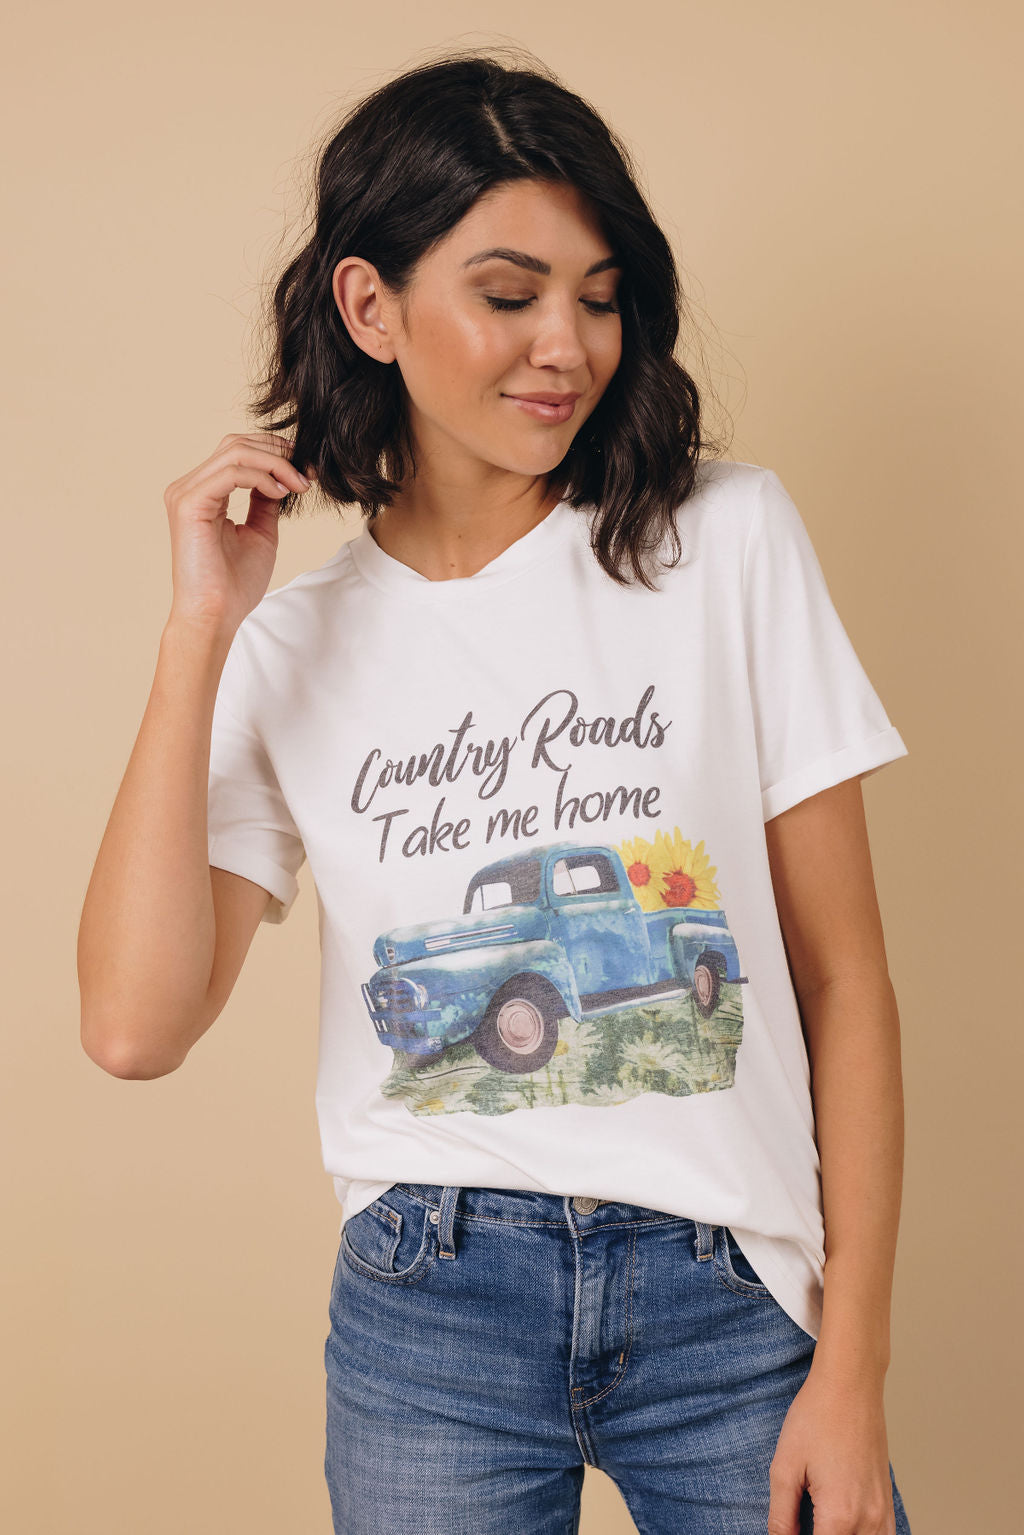 Country Roads Take me home T-shirt